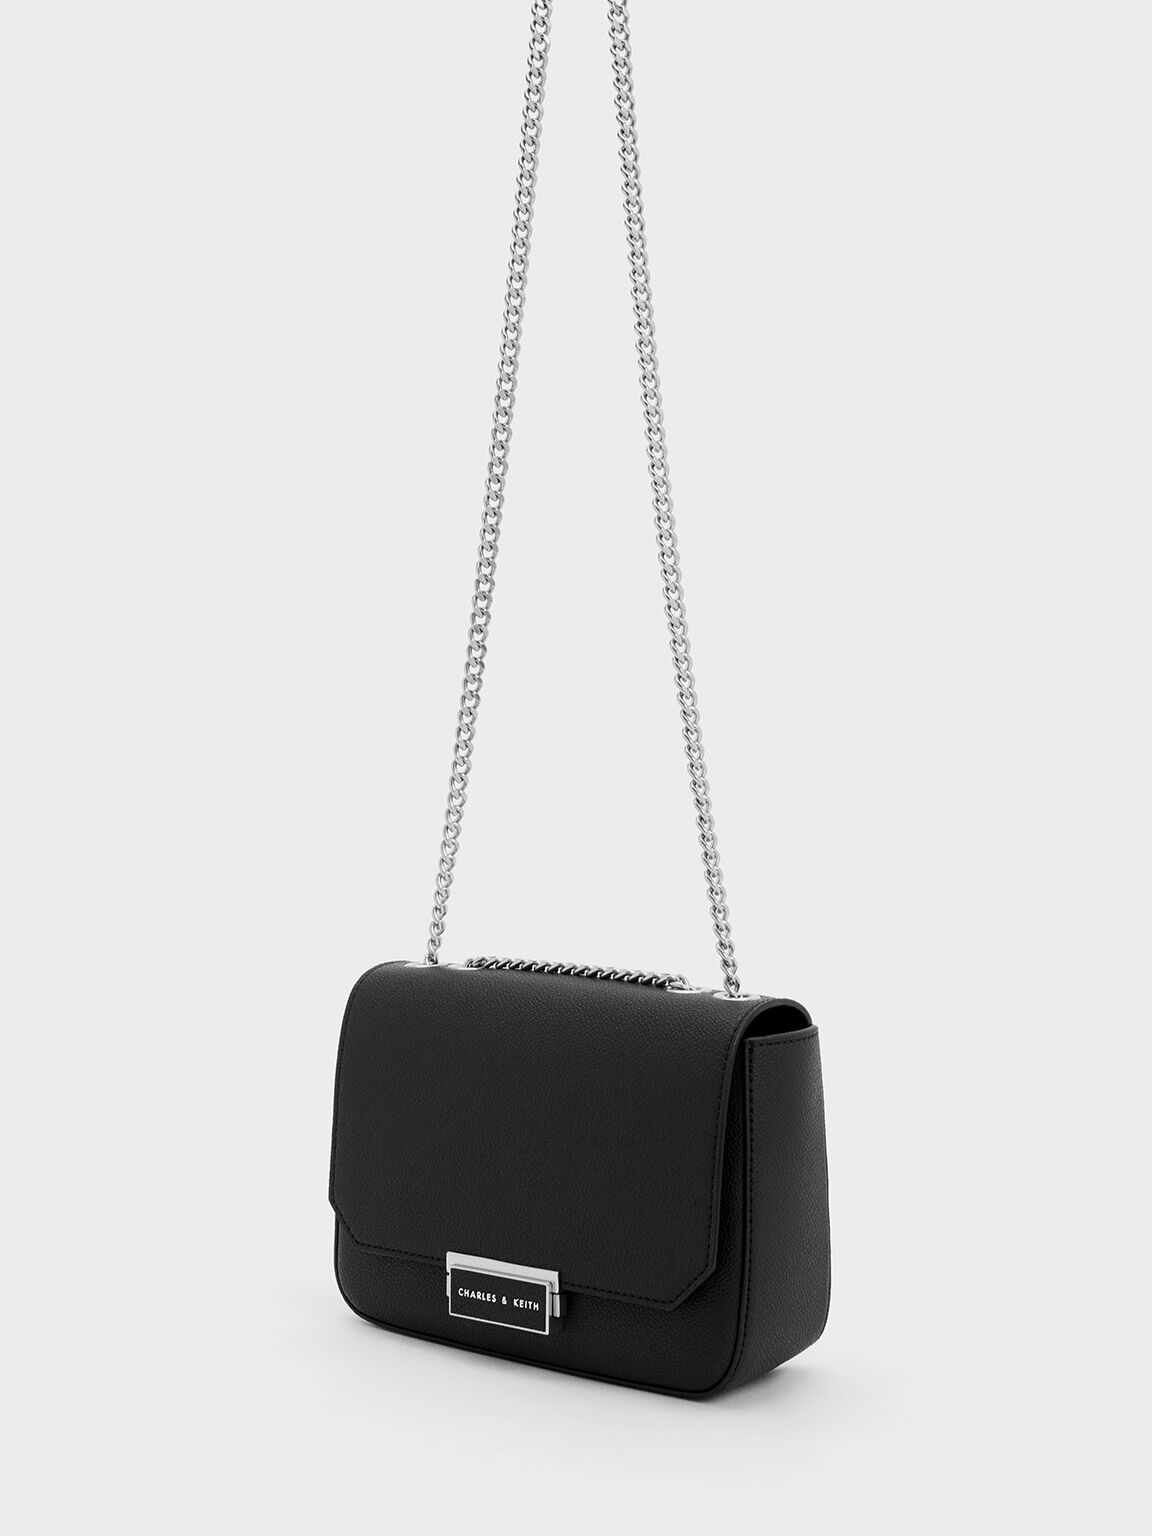 Chain Strap Shoulder Bag - Noir